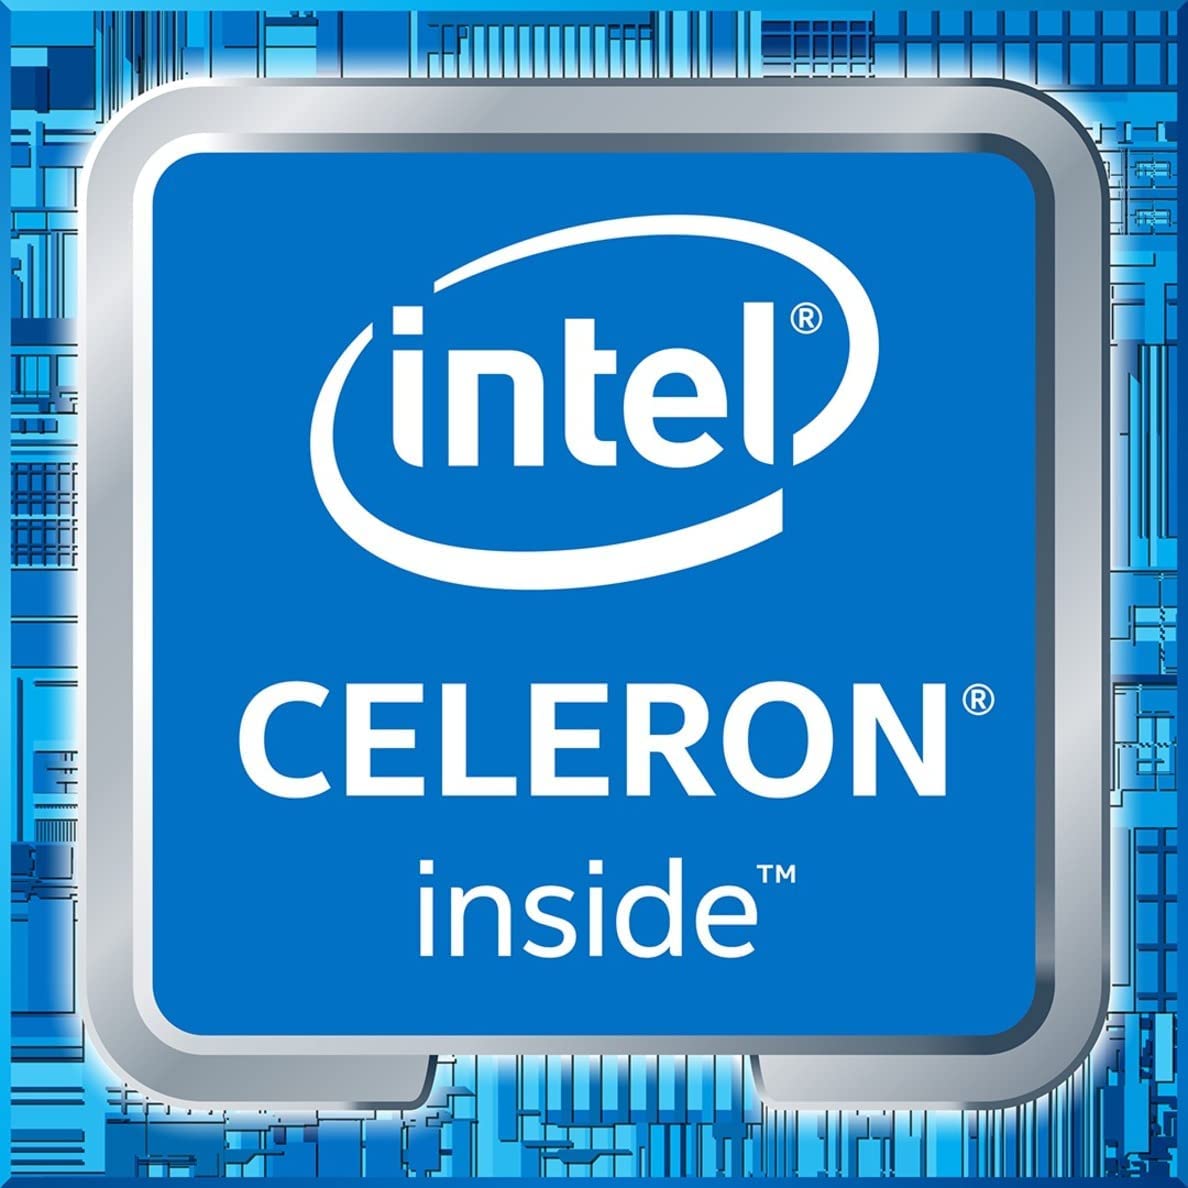 Intel® Cerleon® G5920 Desktop Processor 2 Cores 3.6 GHz LGA1200 (Intel® 400 Series chipset) 58W